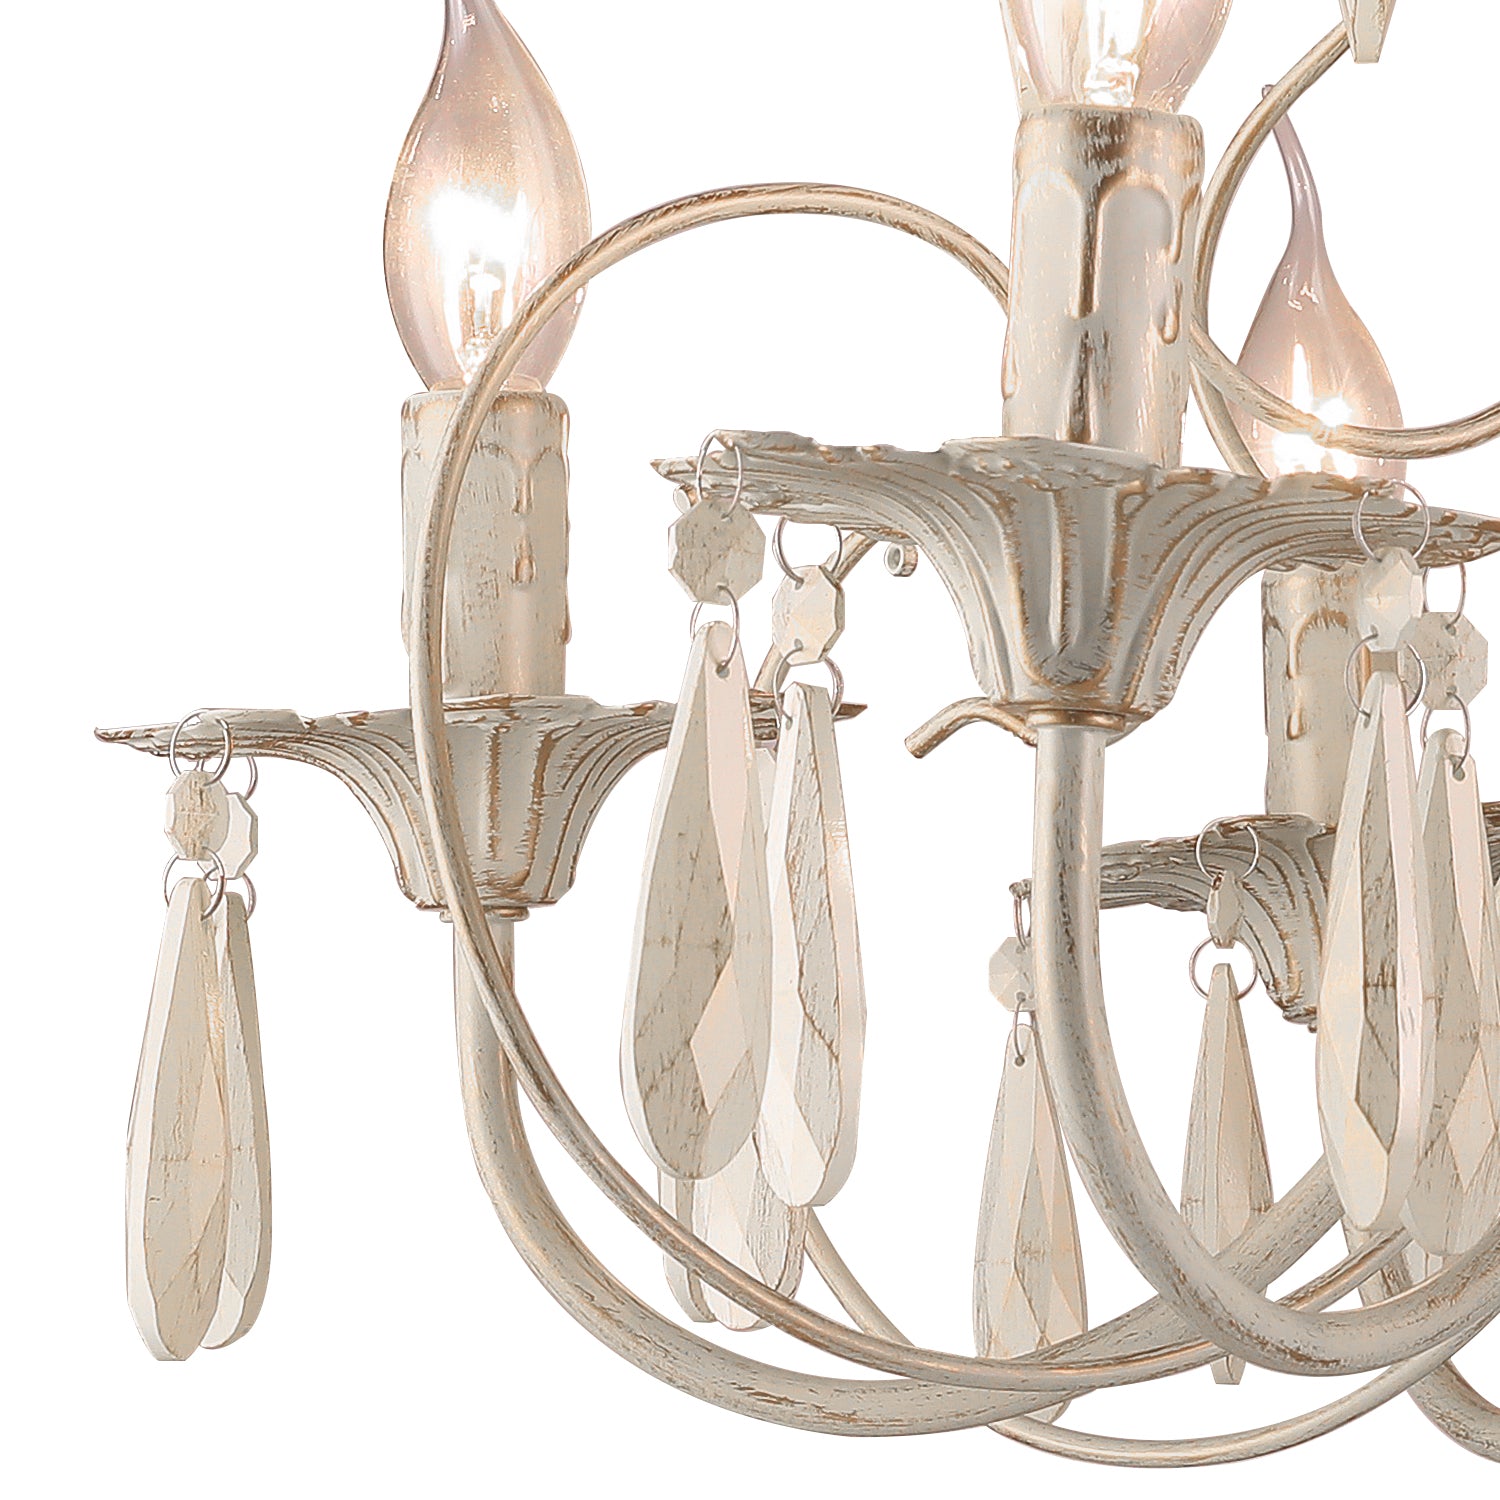 chandeliers ceiling light,chandelier